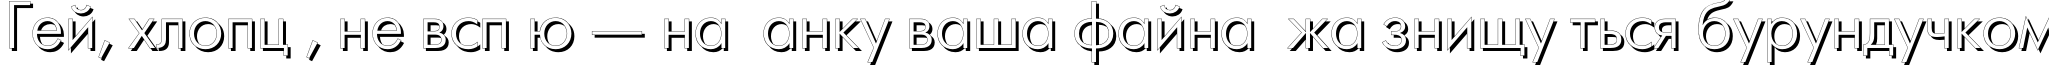 Пример написания шрифтом FuturisShadowC текста на украинском